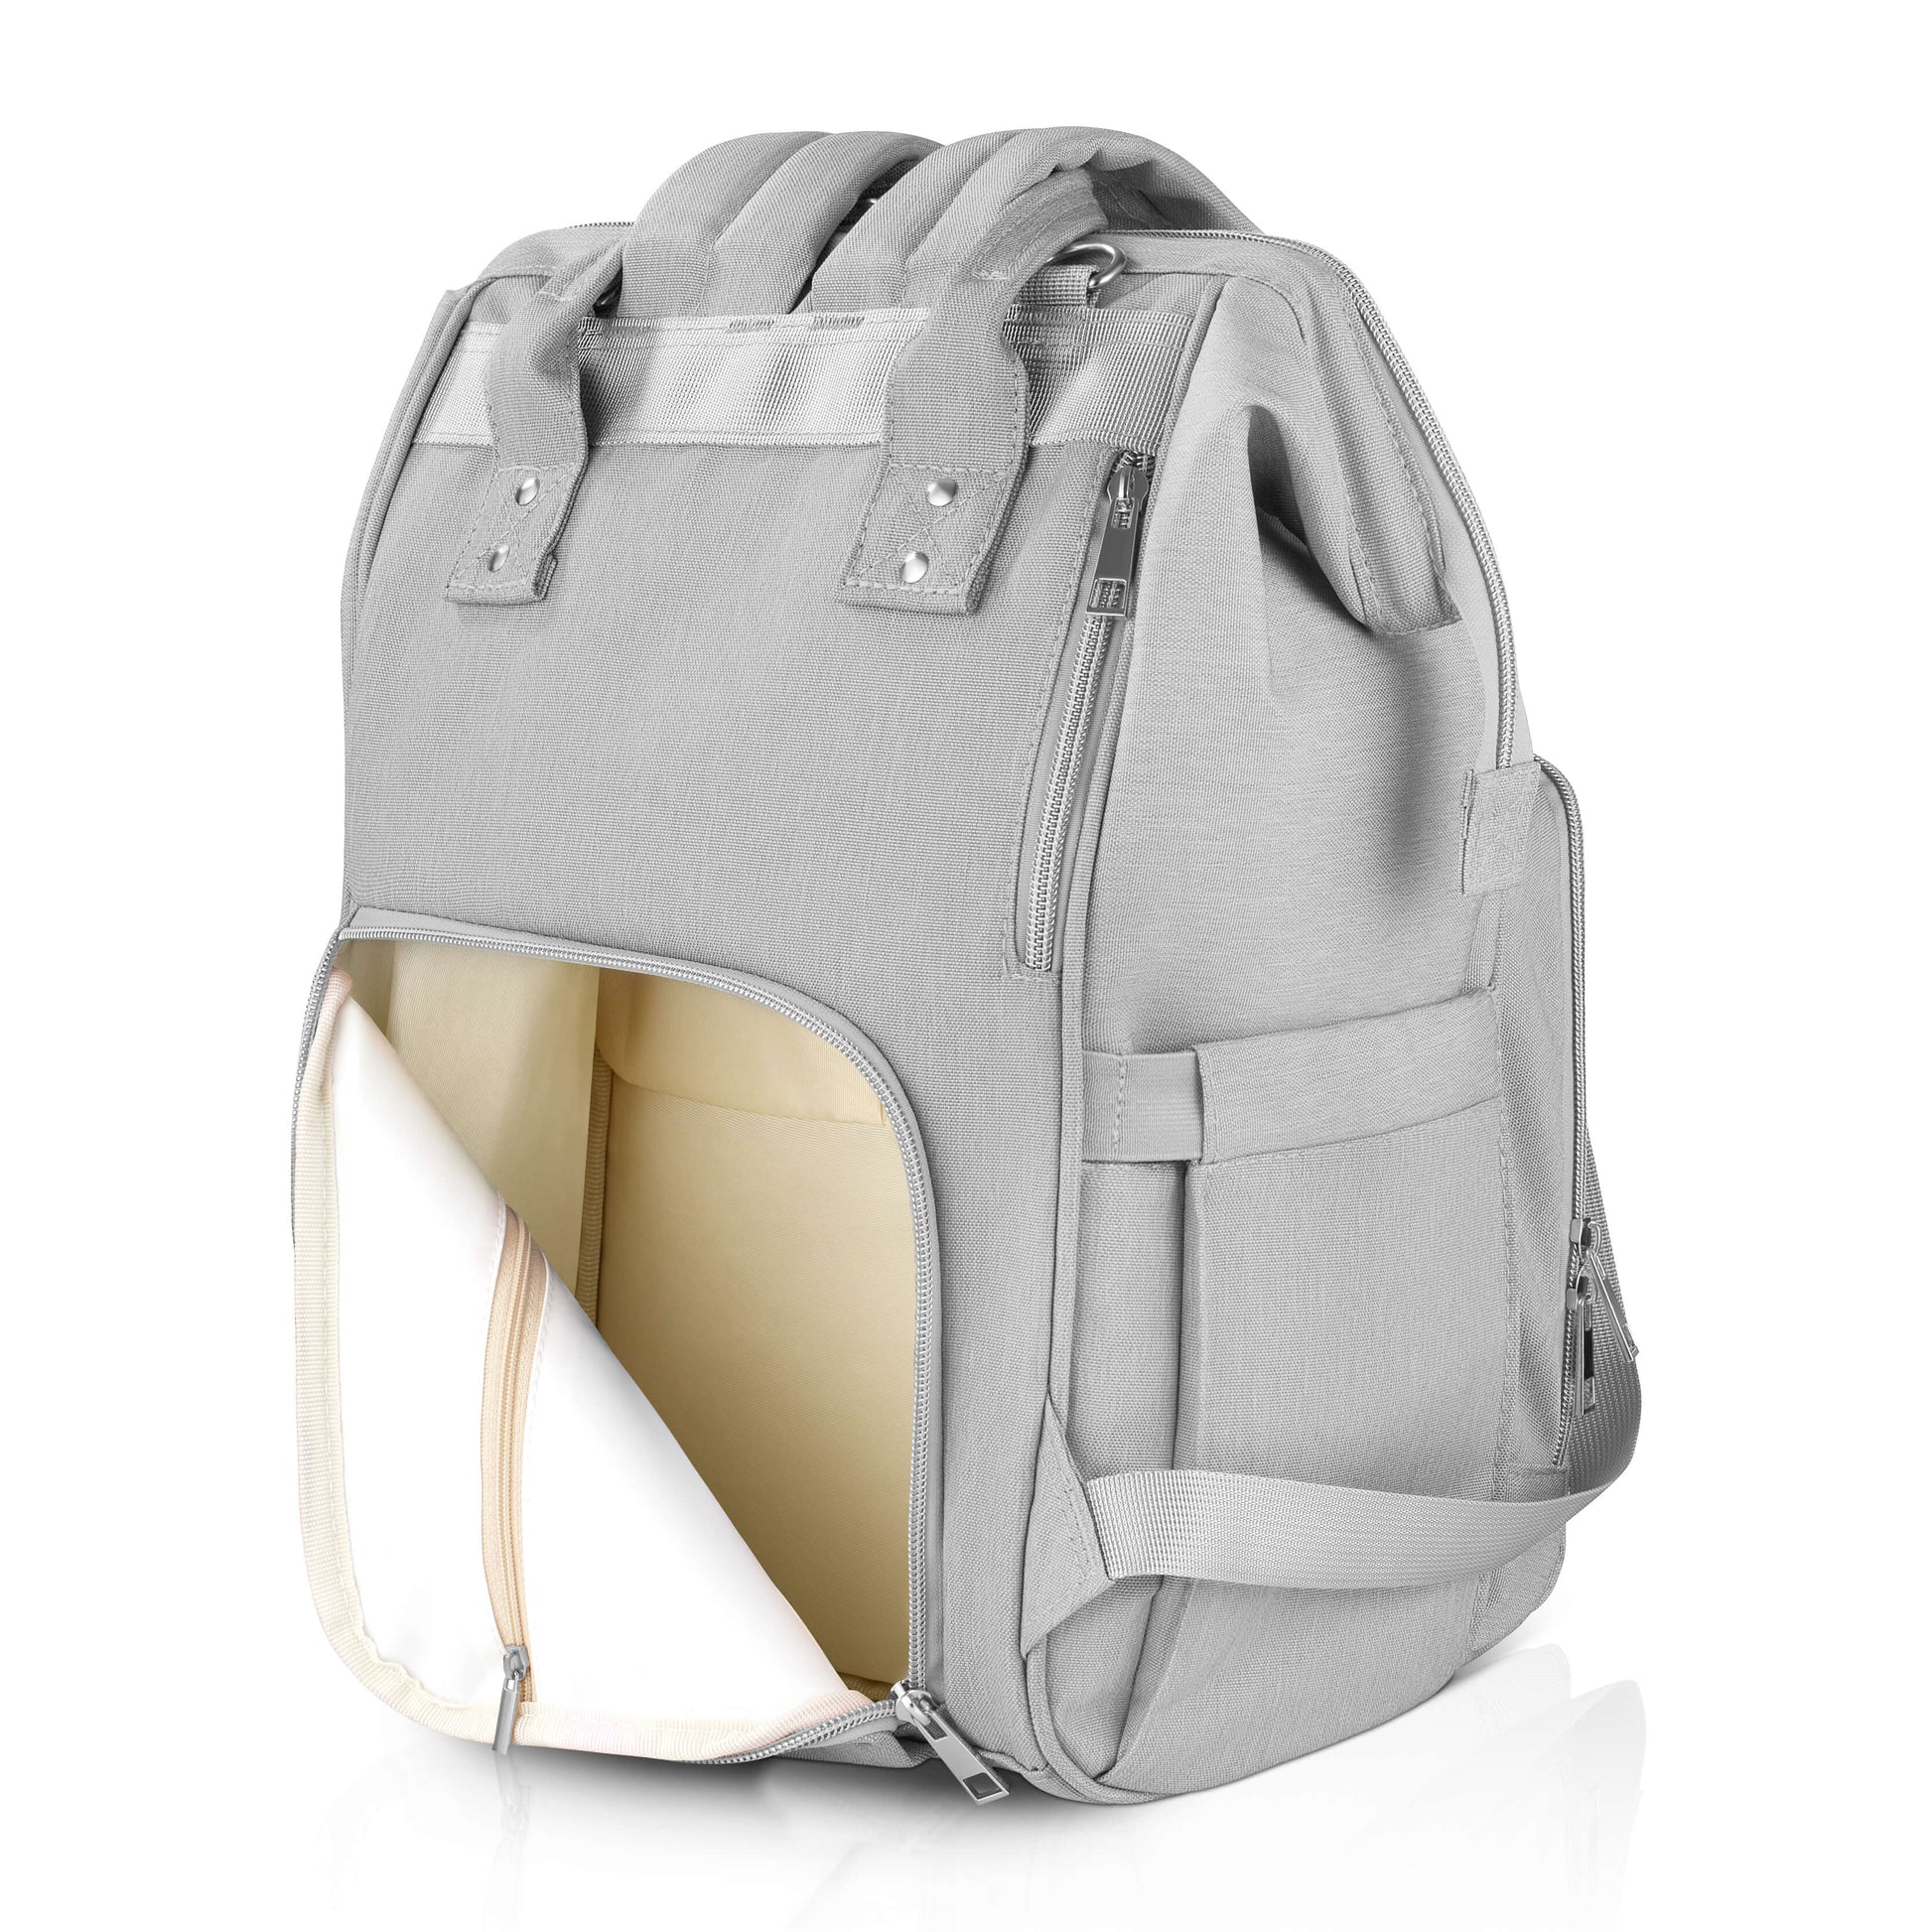 Amilliardi Diaper Bag Backpack - 2 Insulated Bottle Holders - Detachable Stroller Straps - Black Vegan Leather - Small